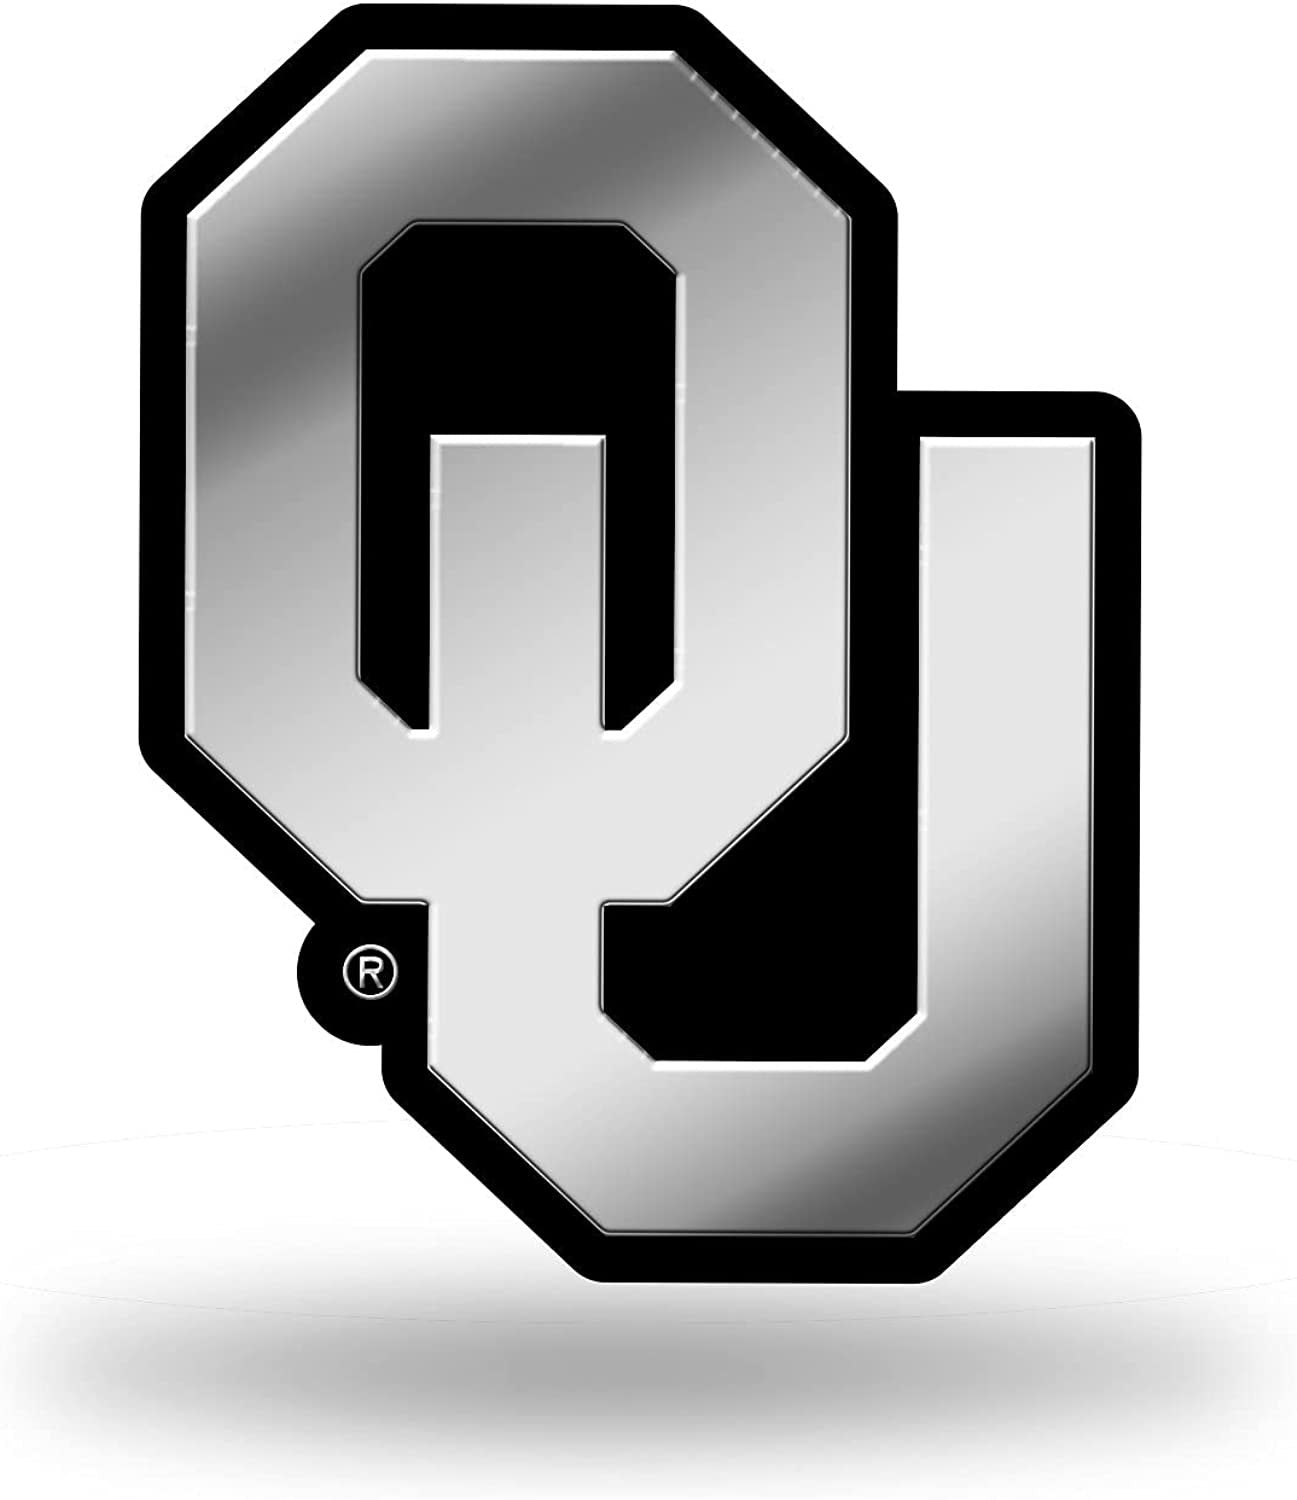 University of Oklahoma Sooners Silver Chrome Color Auto Emblem, Raised Molded Plastic, 3.5 Inch, Adhesive Tape Backing